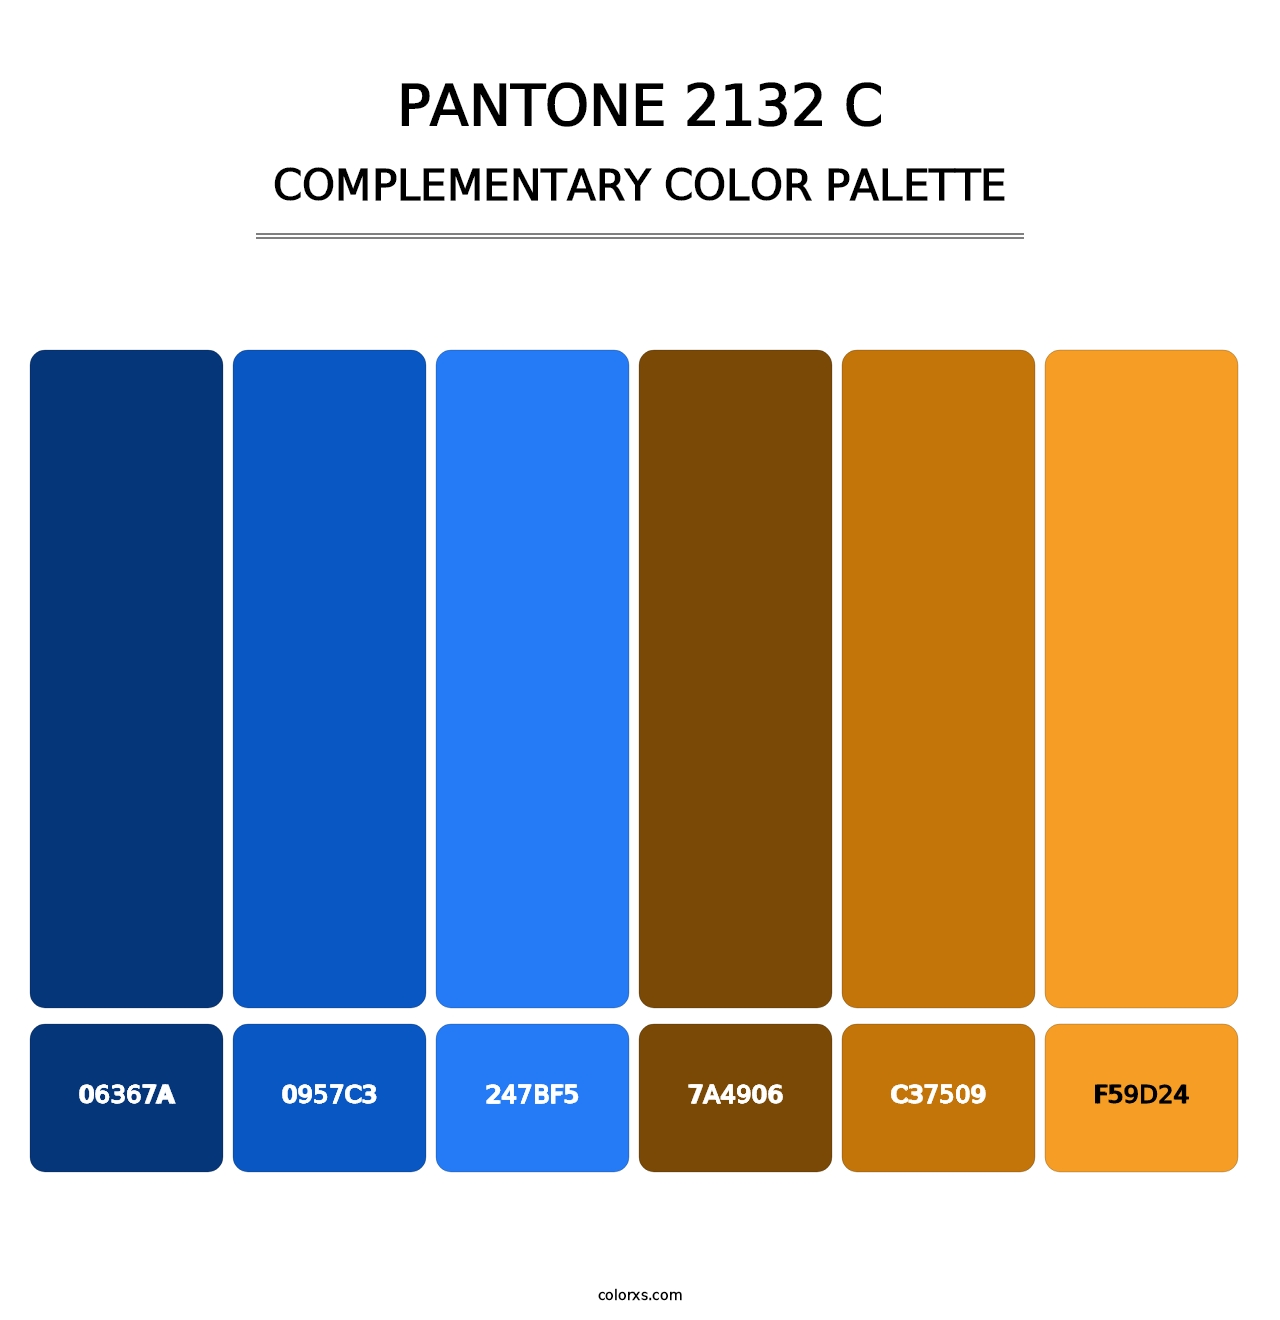 PANTONE 2132 C - Complementary Color Palette